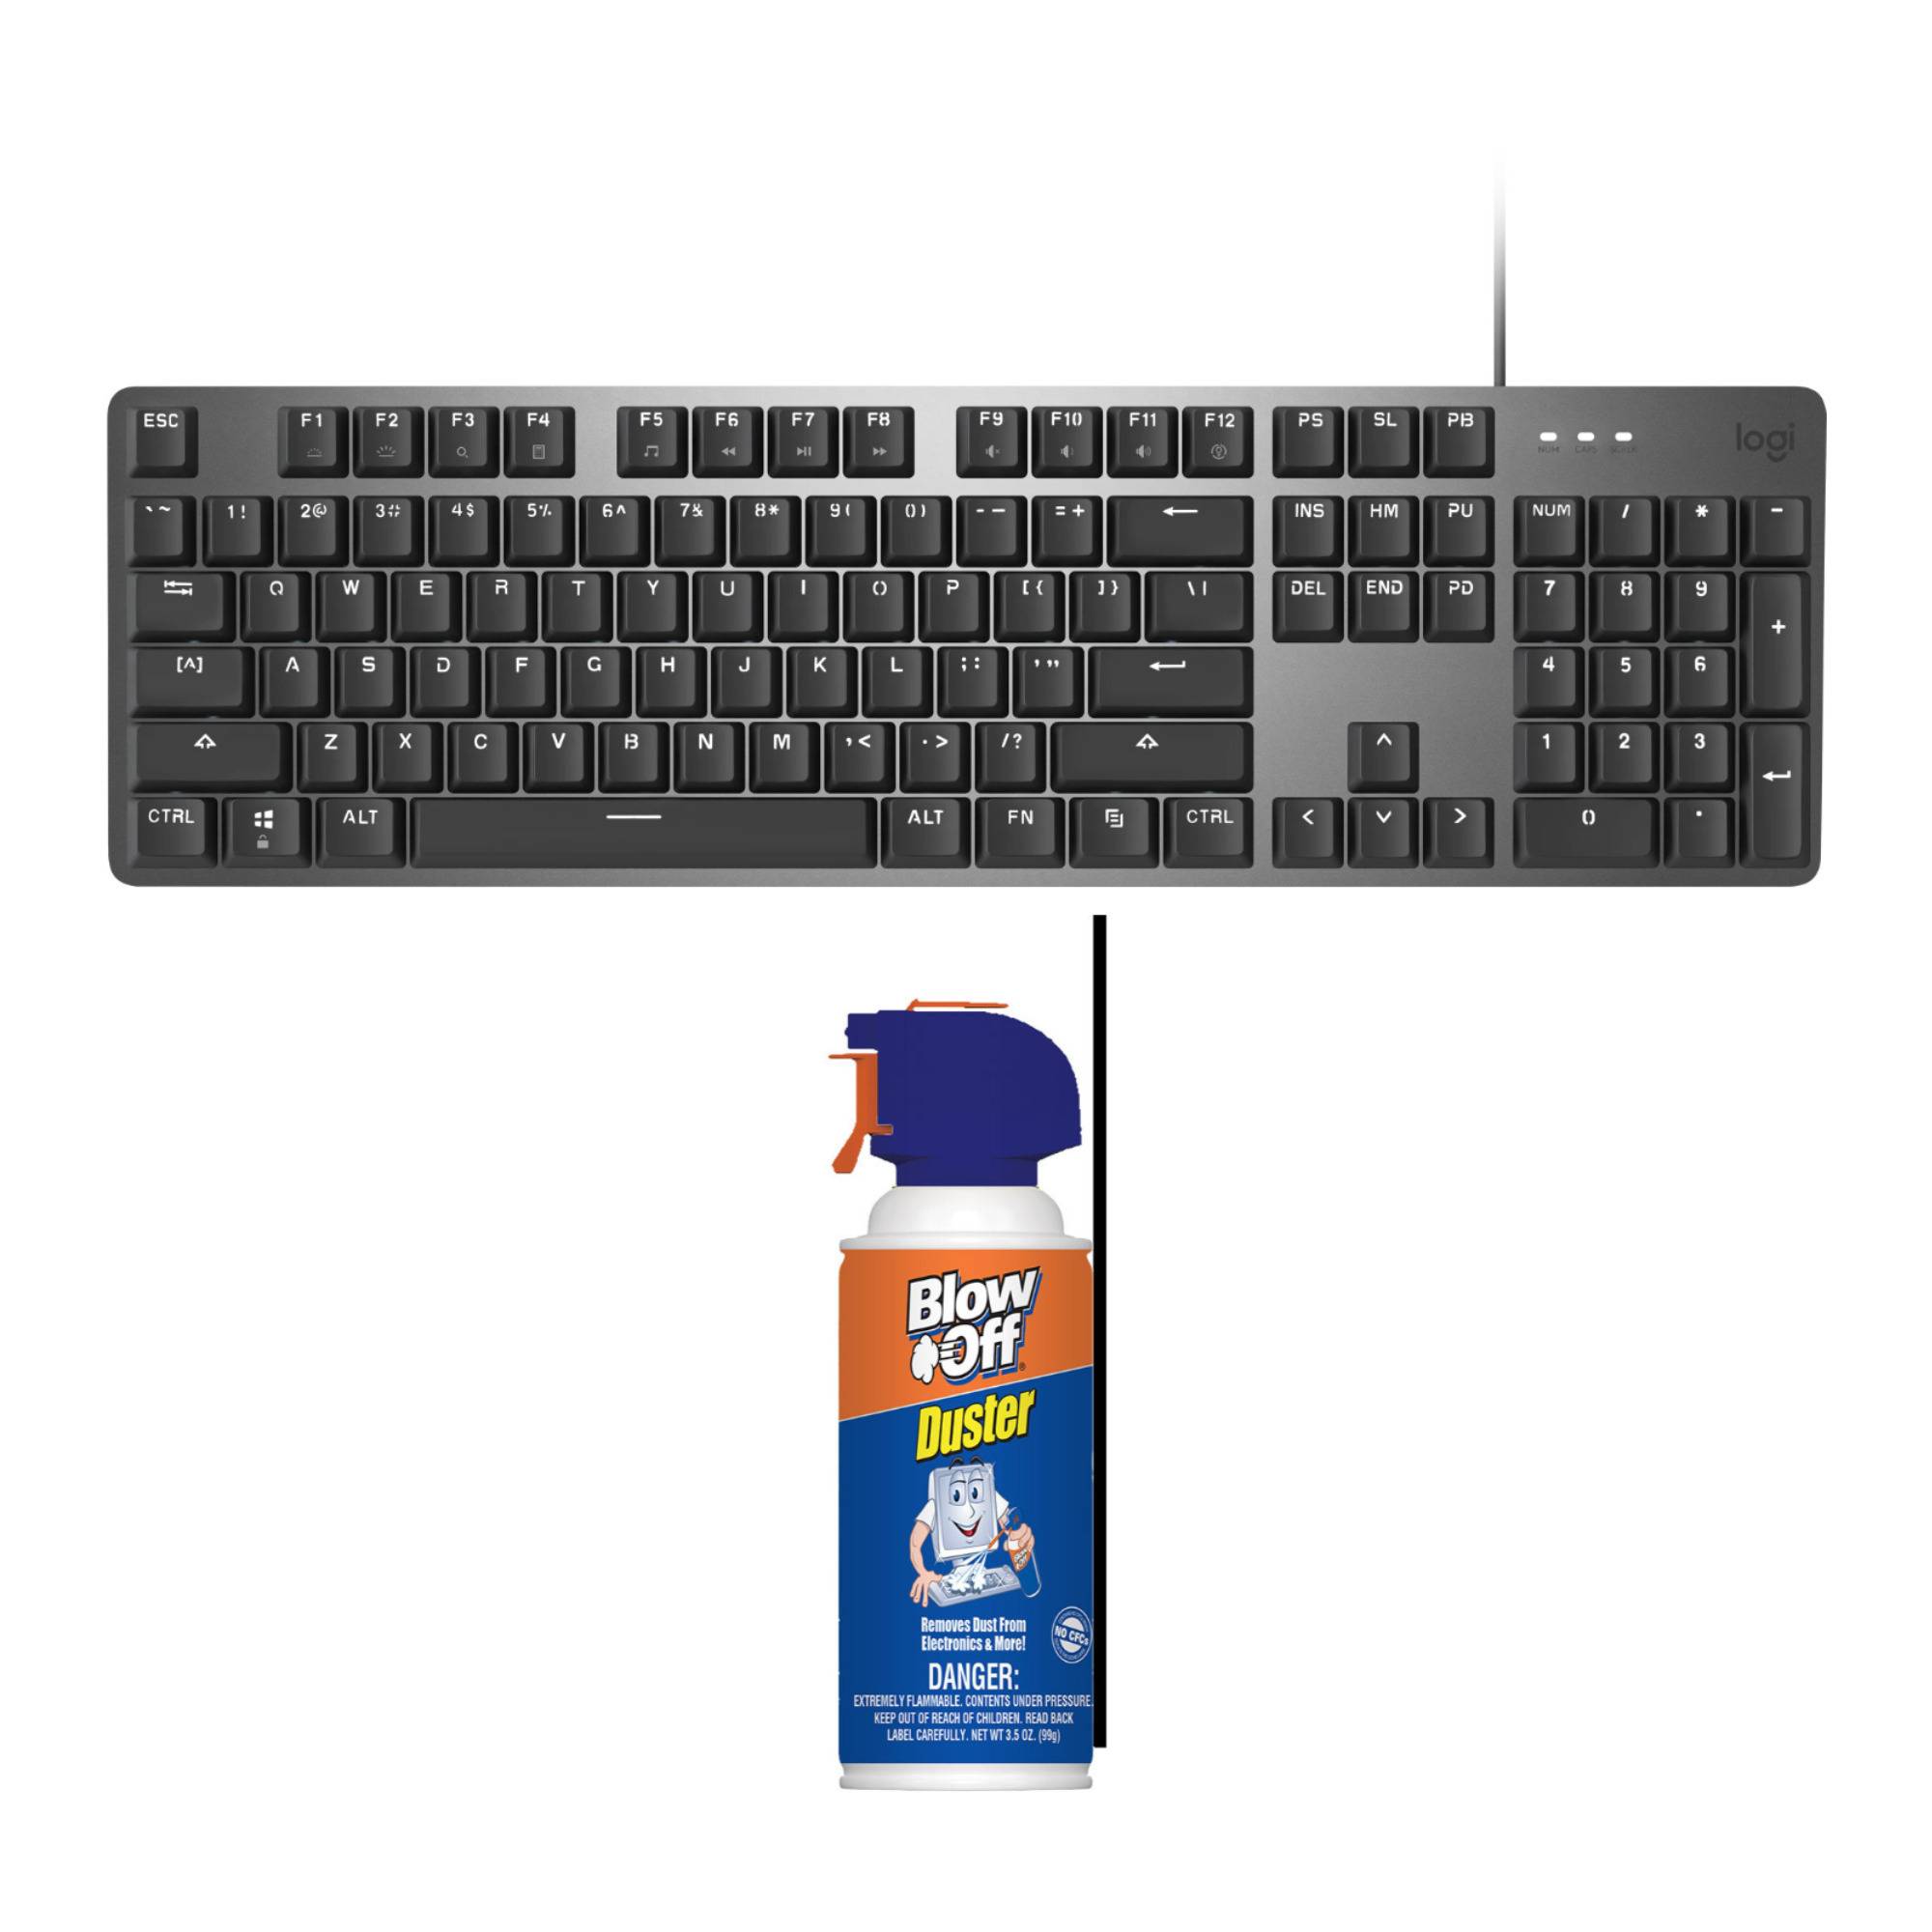 Logitech K845ch Mechanical Illuminated Aluminum Keyboard with Cherry Blue Switches Bundle